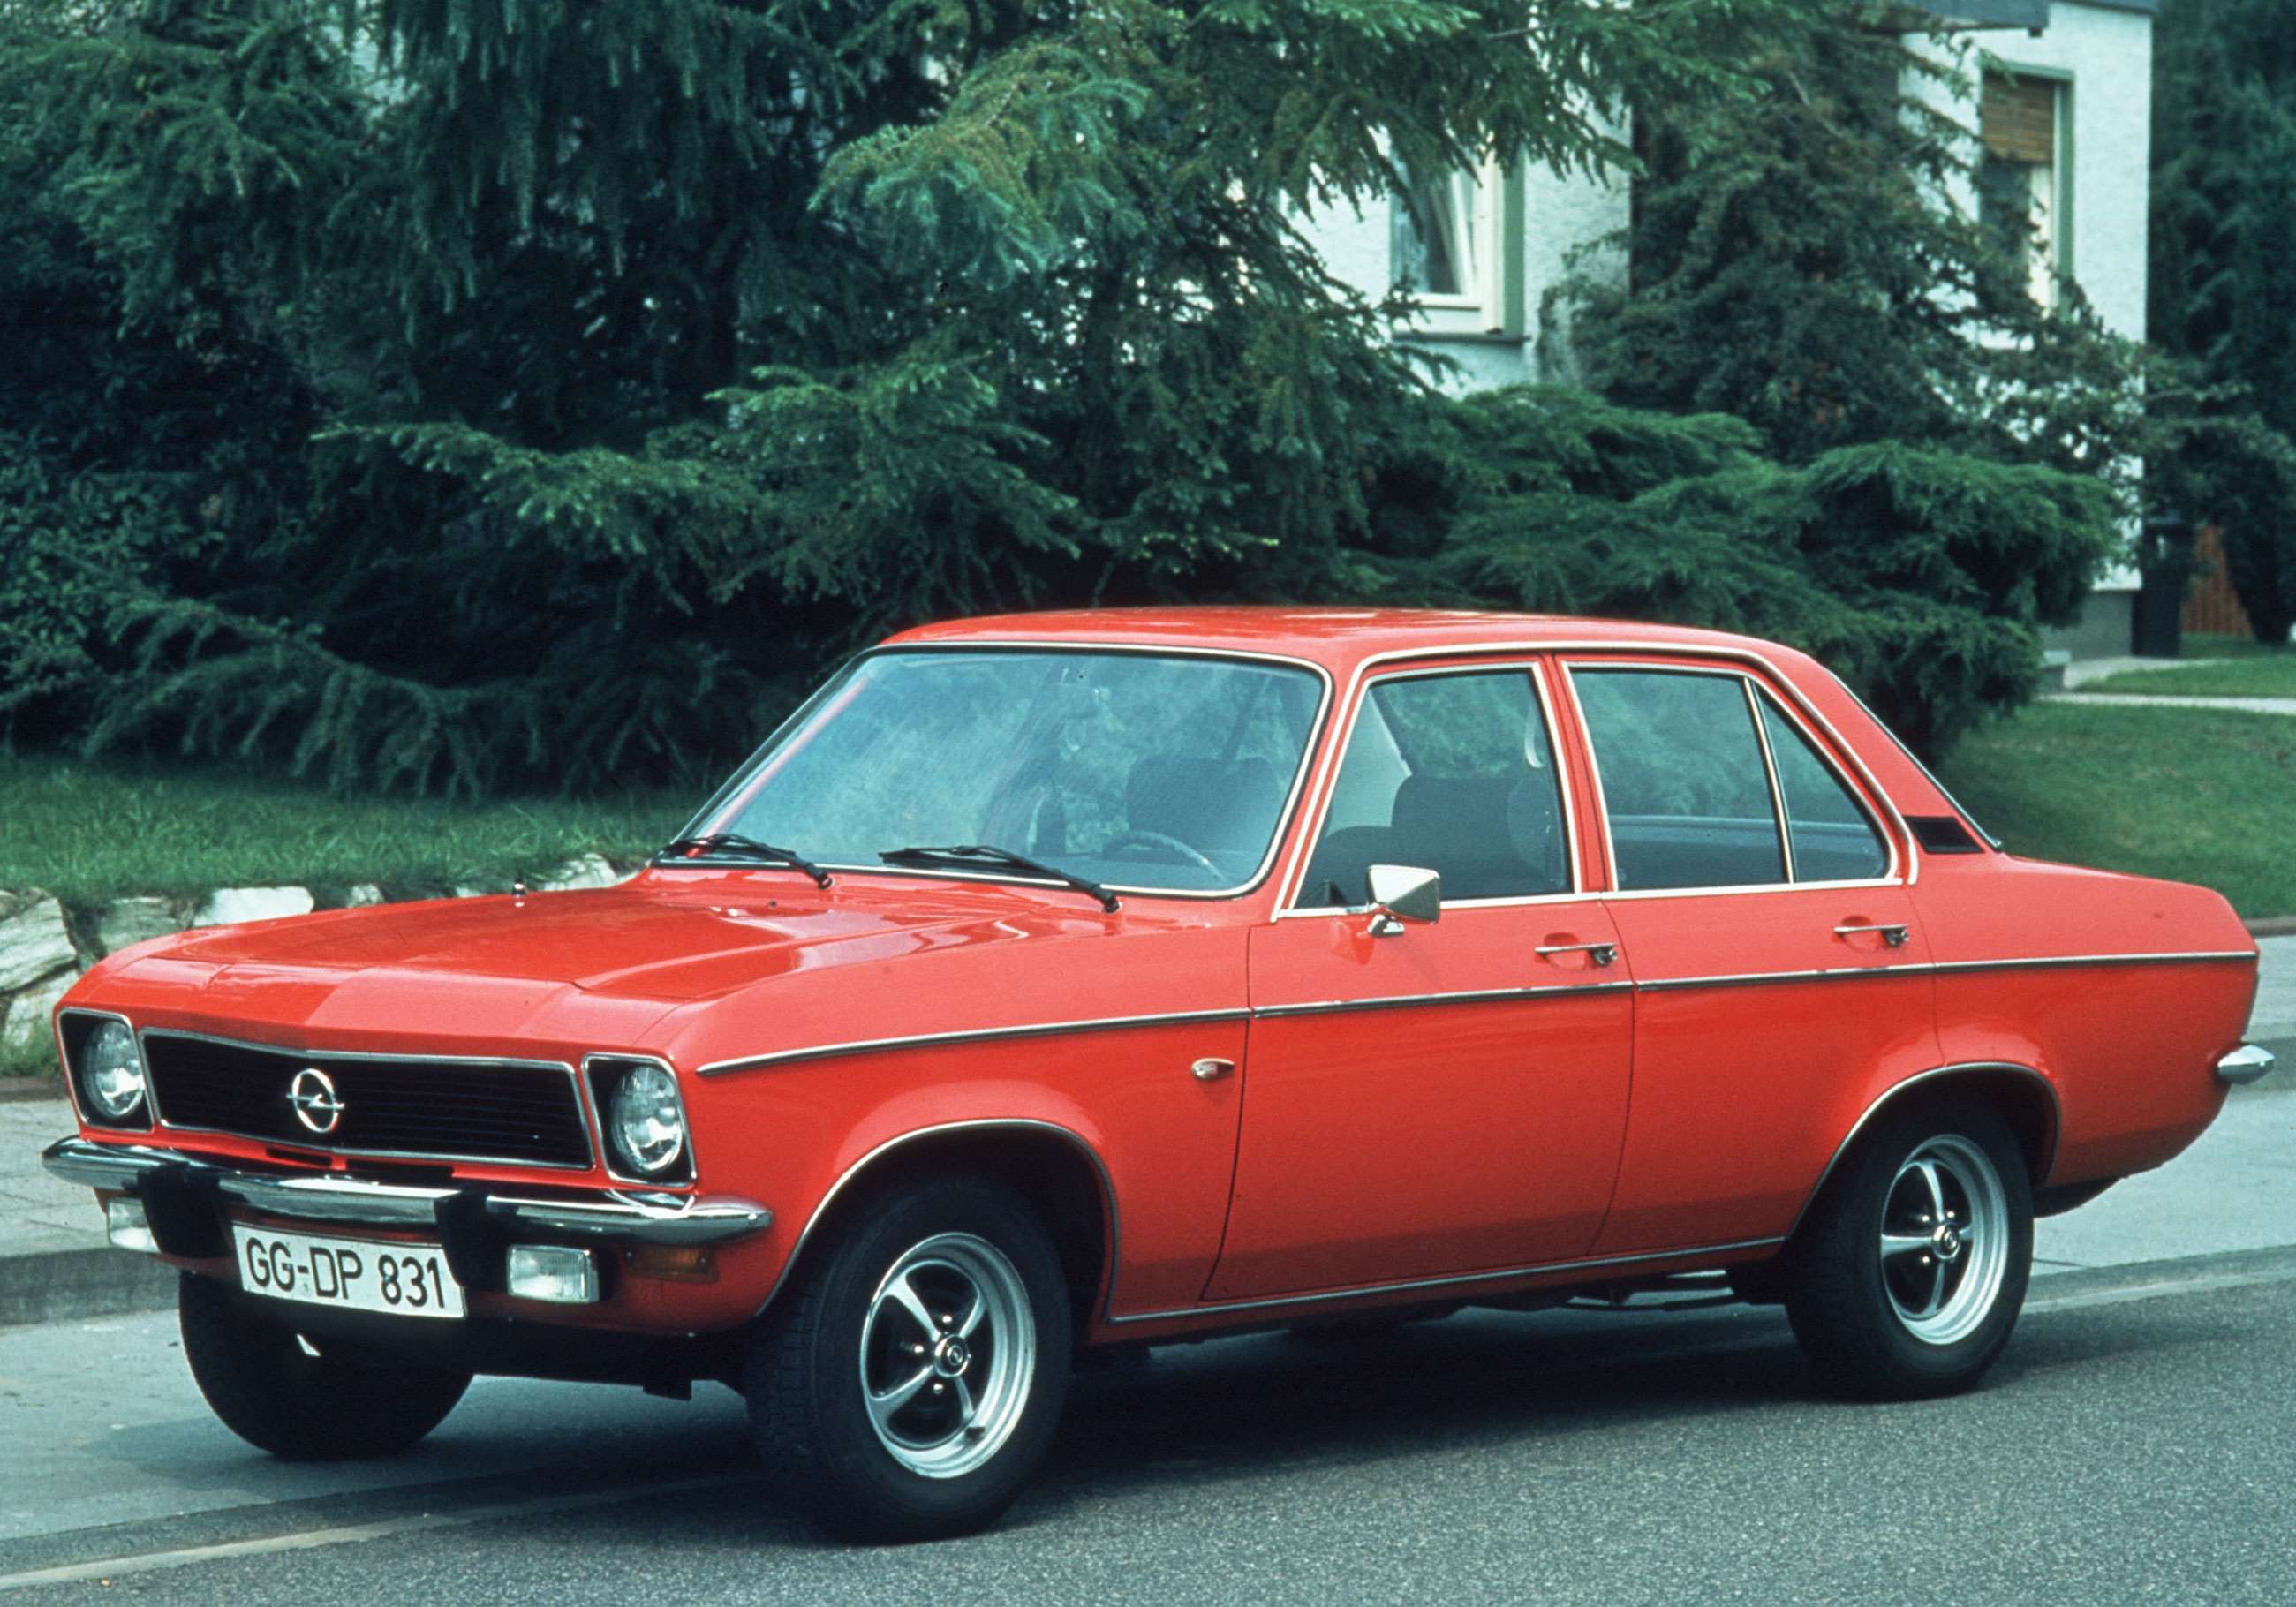 cars-from-1970-11-opel-ascona-goodwood-10012020.jpg